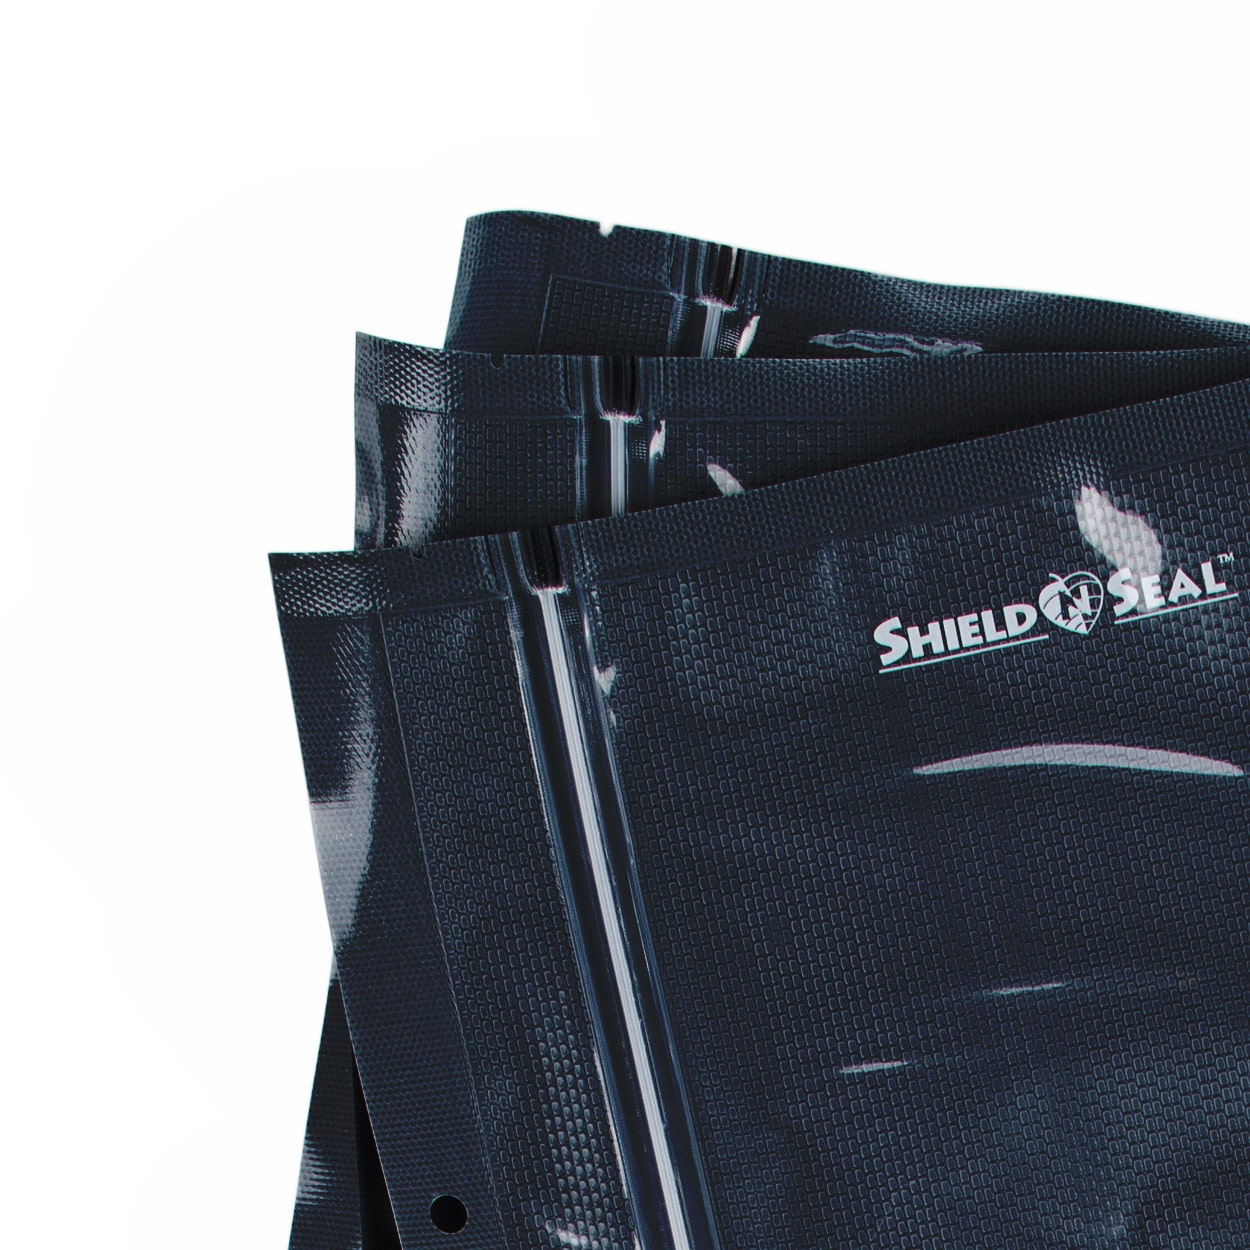 Shield N Seal Shield Sealer 15″ Commercial Grade Vacuum